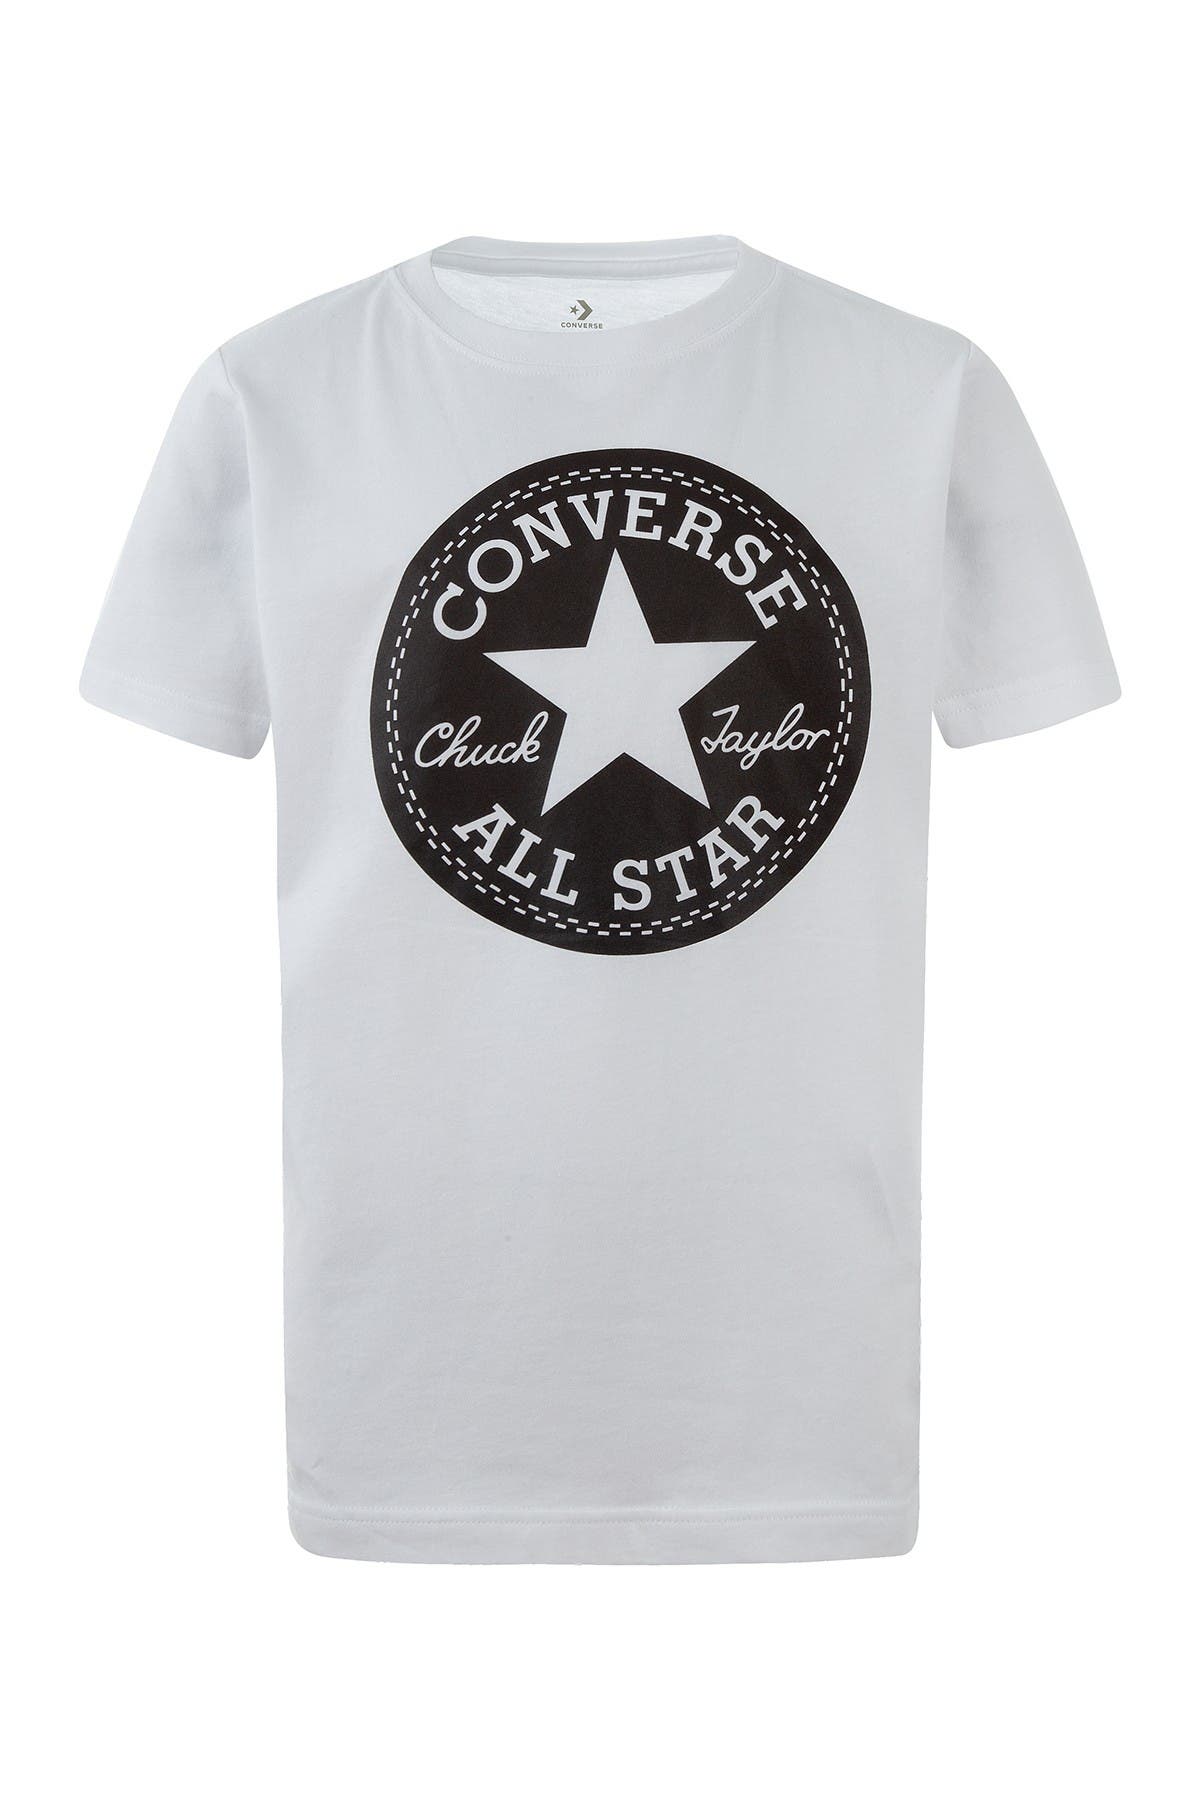 converse chuck taylor shirt